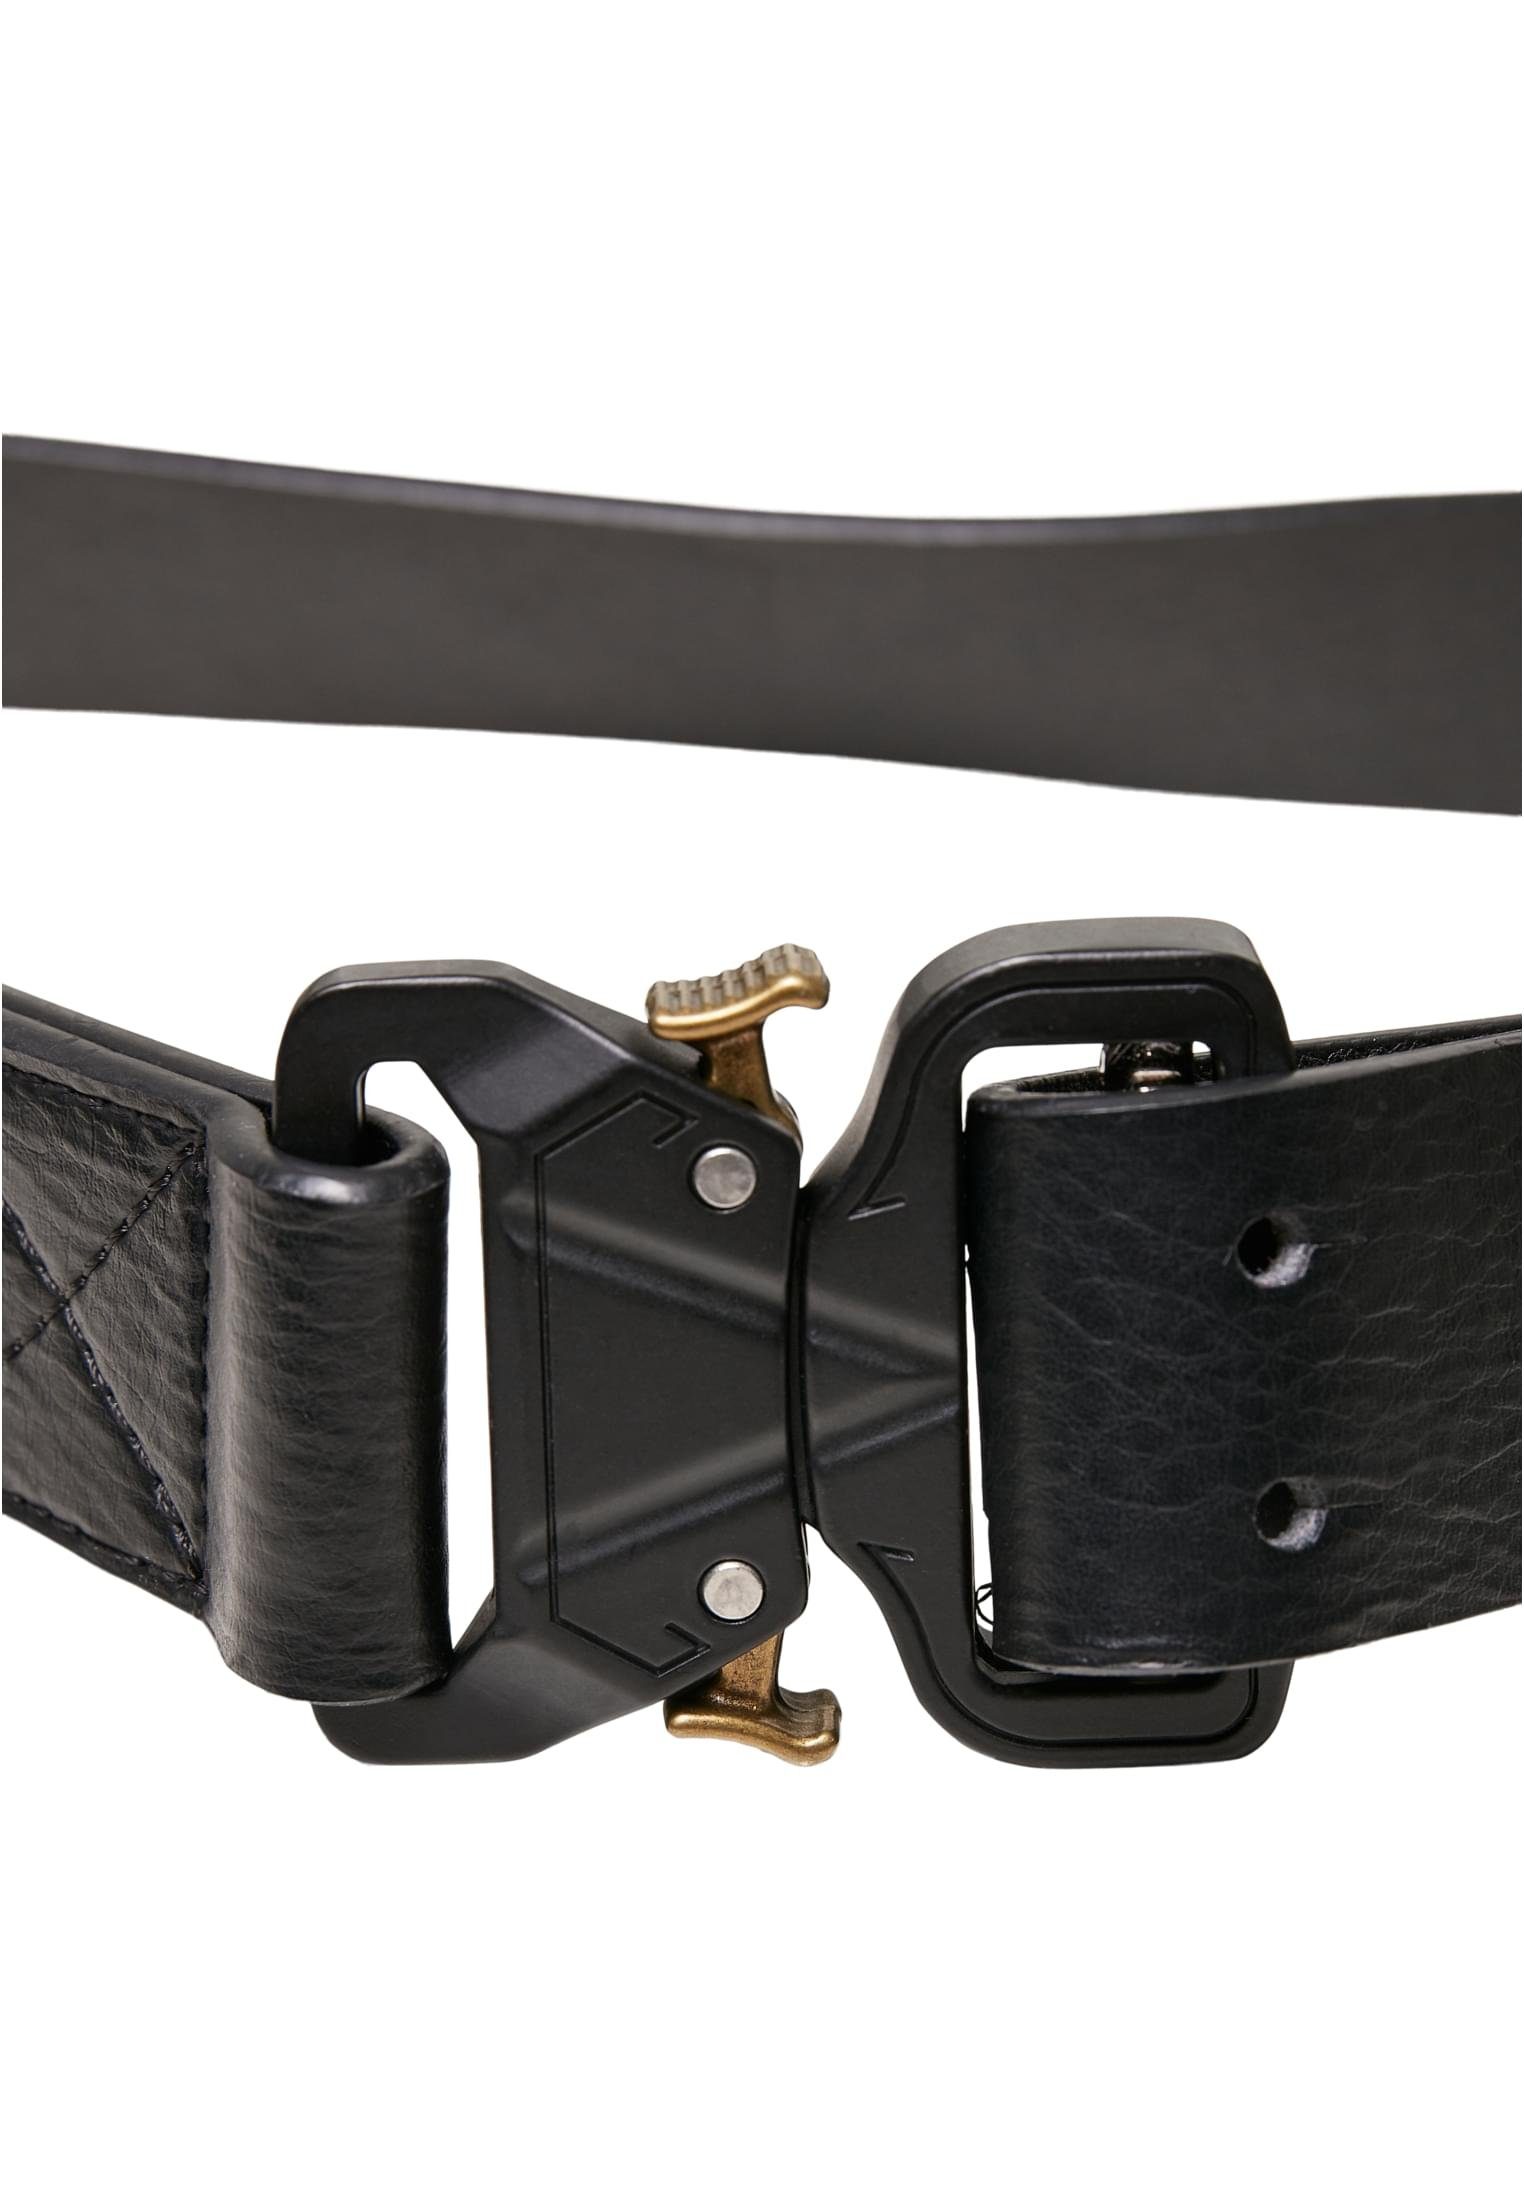 CLASSICS URBAN Accessoires Hook, Belt Hüftgürtel Urban Classics Accessories Leather With Imitation